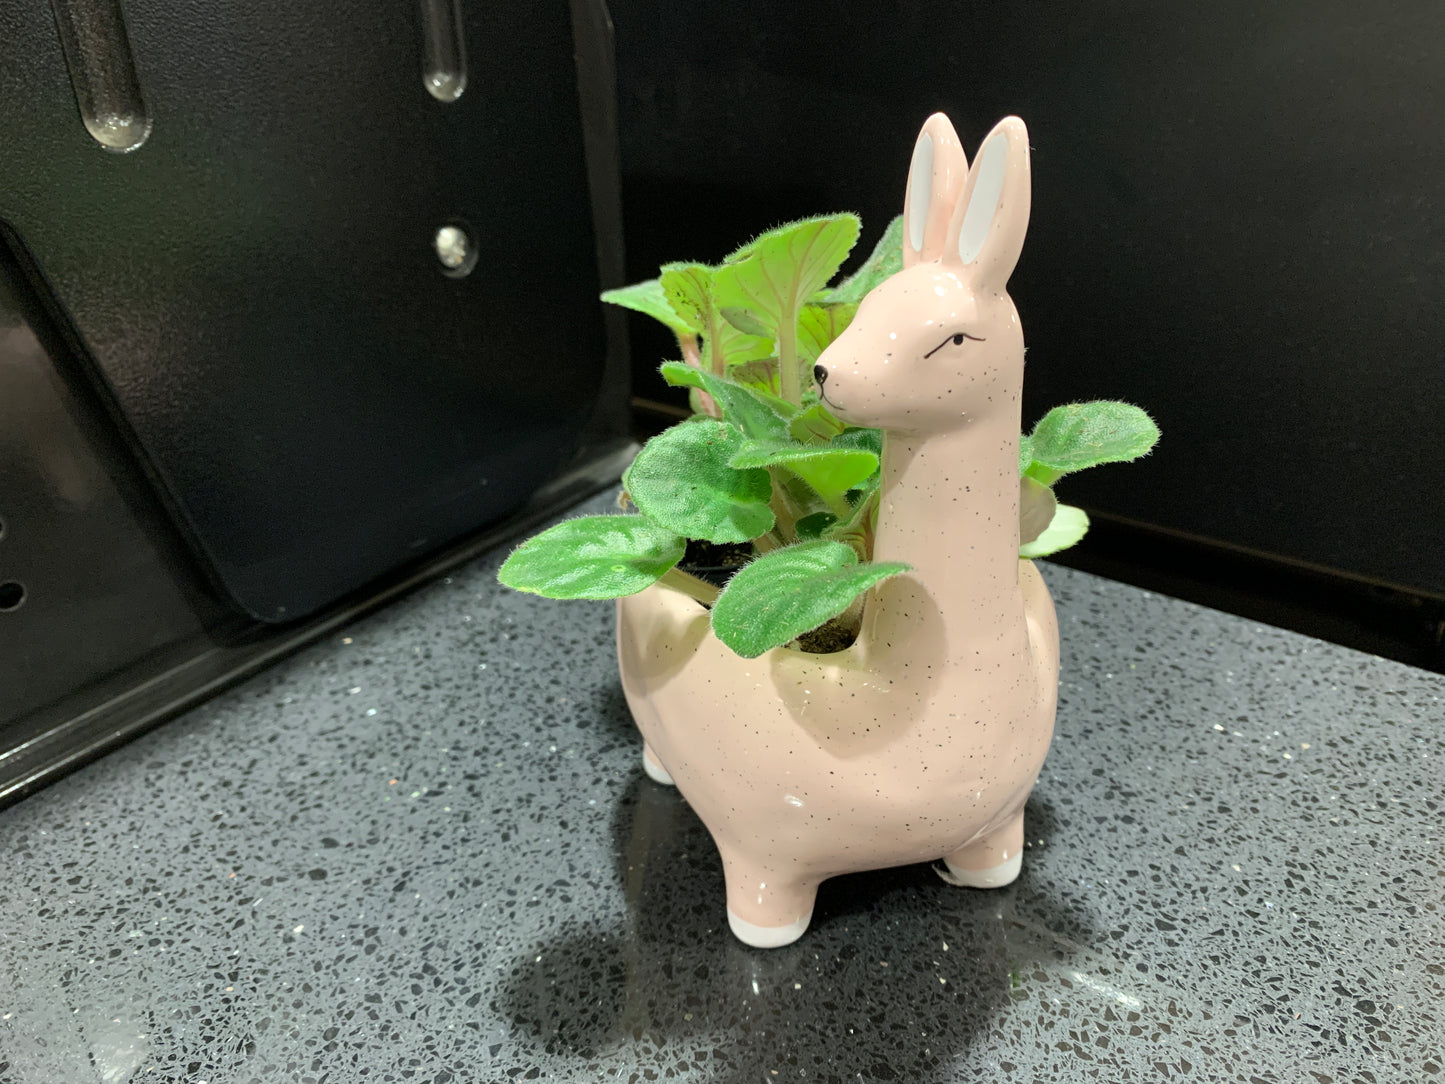 Small Pink Alpaca Ceramic Pot for Indoor Plant for sale online in Australia